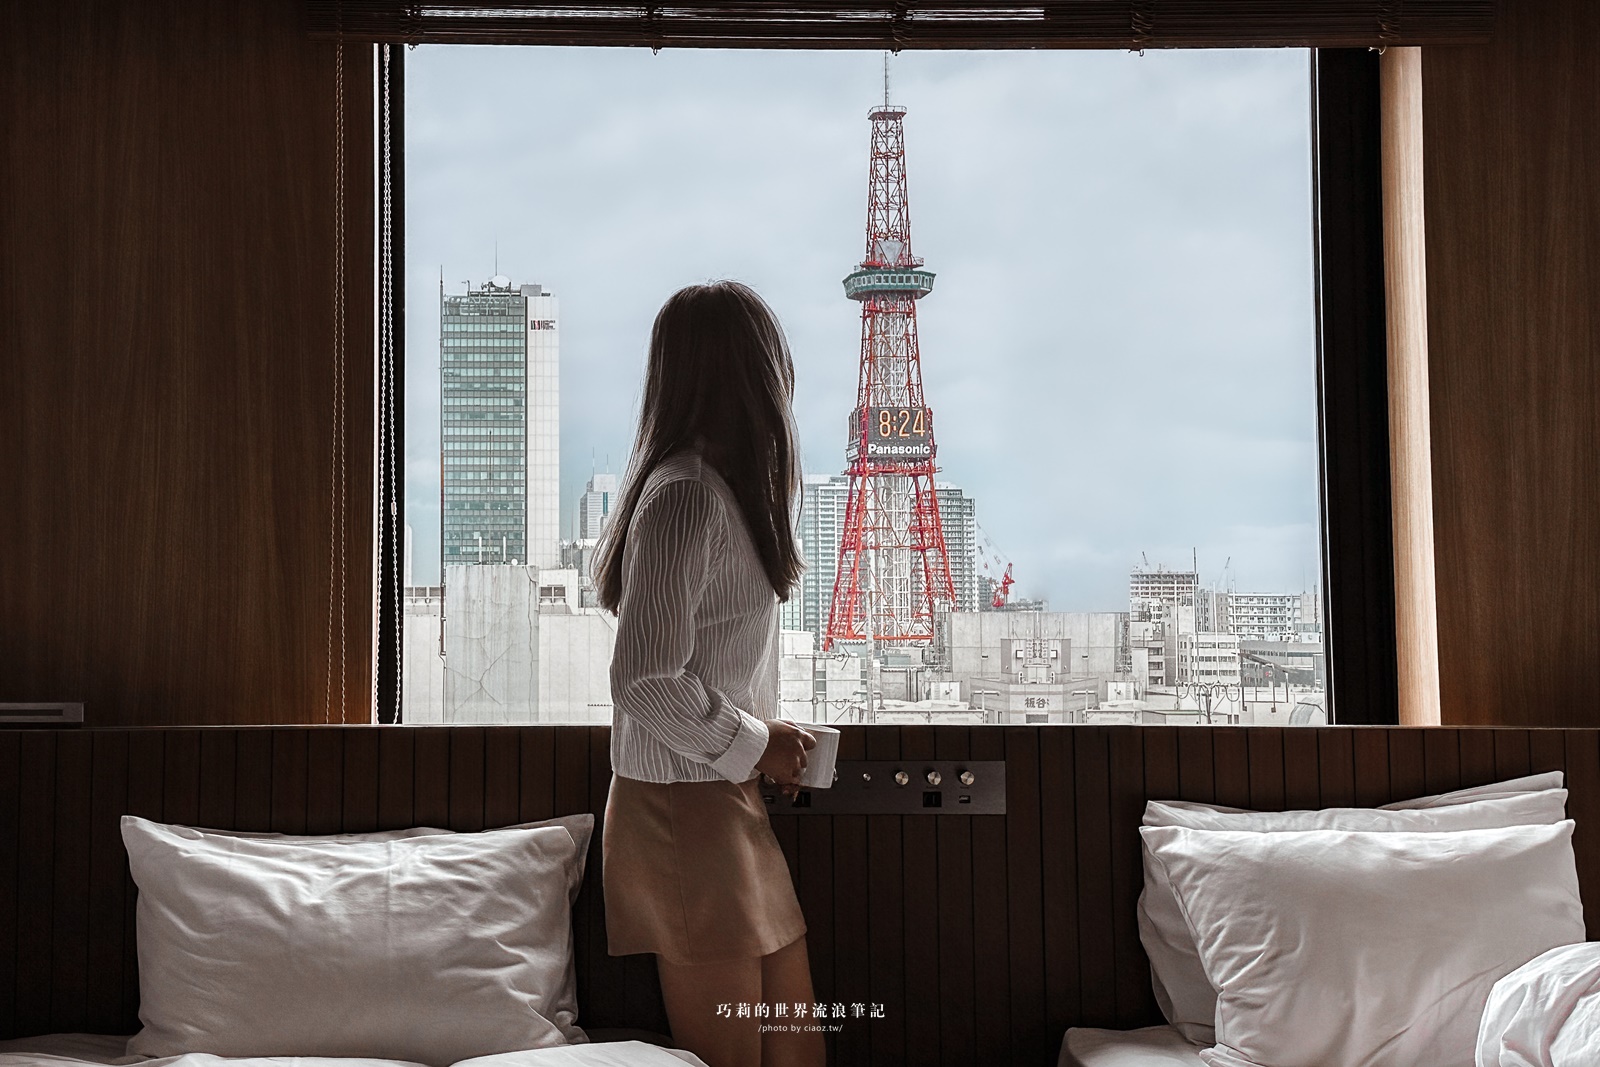 Bespoke Hotel Sapporo 札幌定制飯店｜狸小路商店街只要1分鐘，在房間就看得到札幌電視塔！輕工業風有質感（札幌飯店推薦） @巧莉的世界流浪筆記